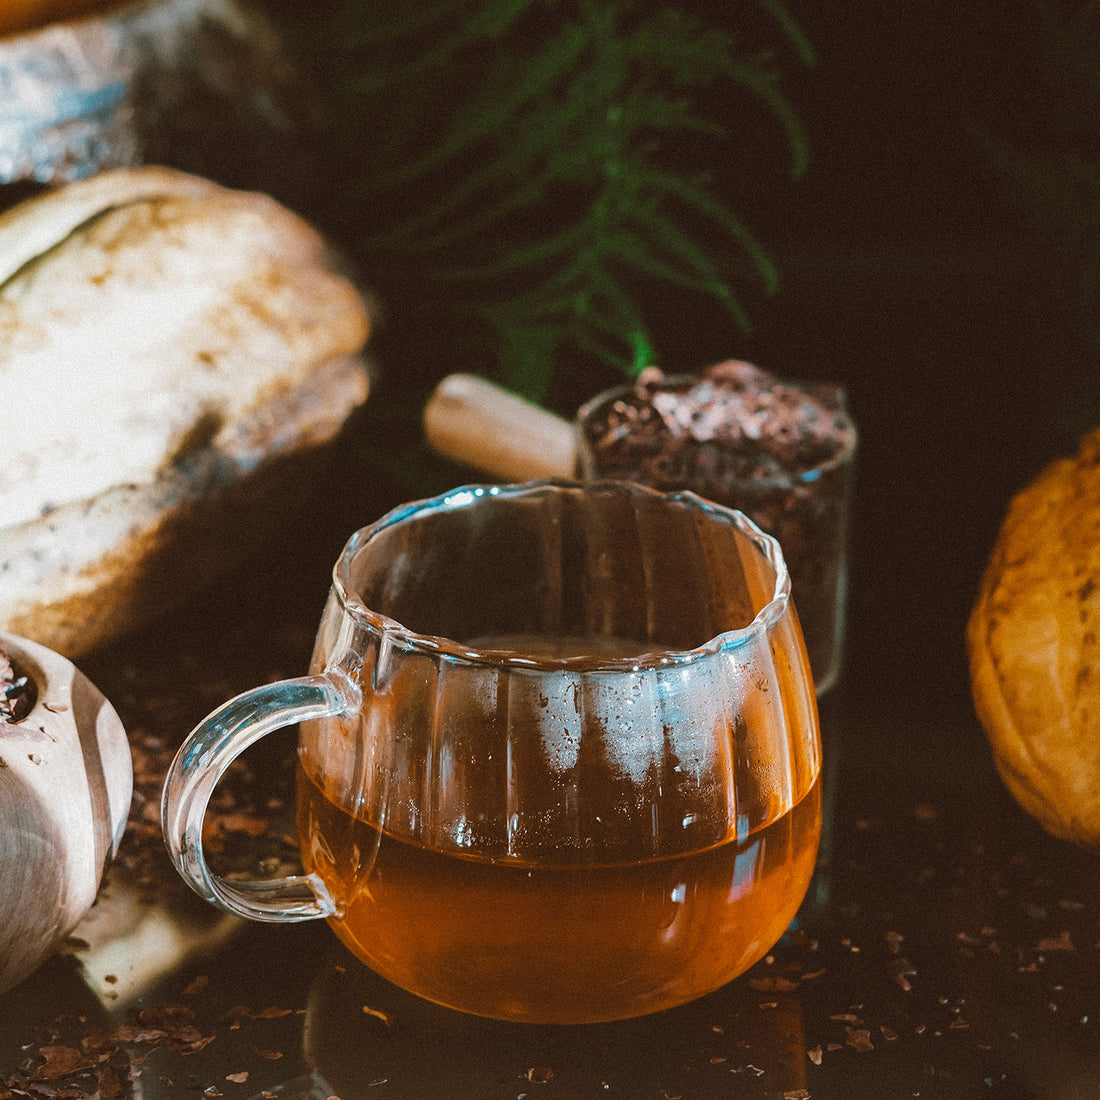 Organic Cacao Tea